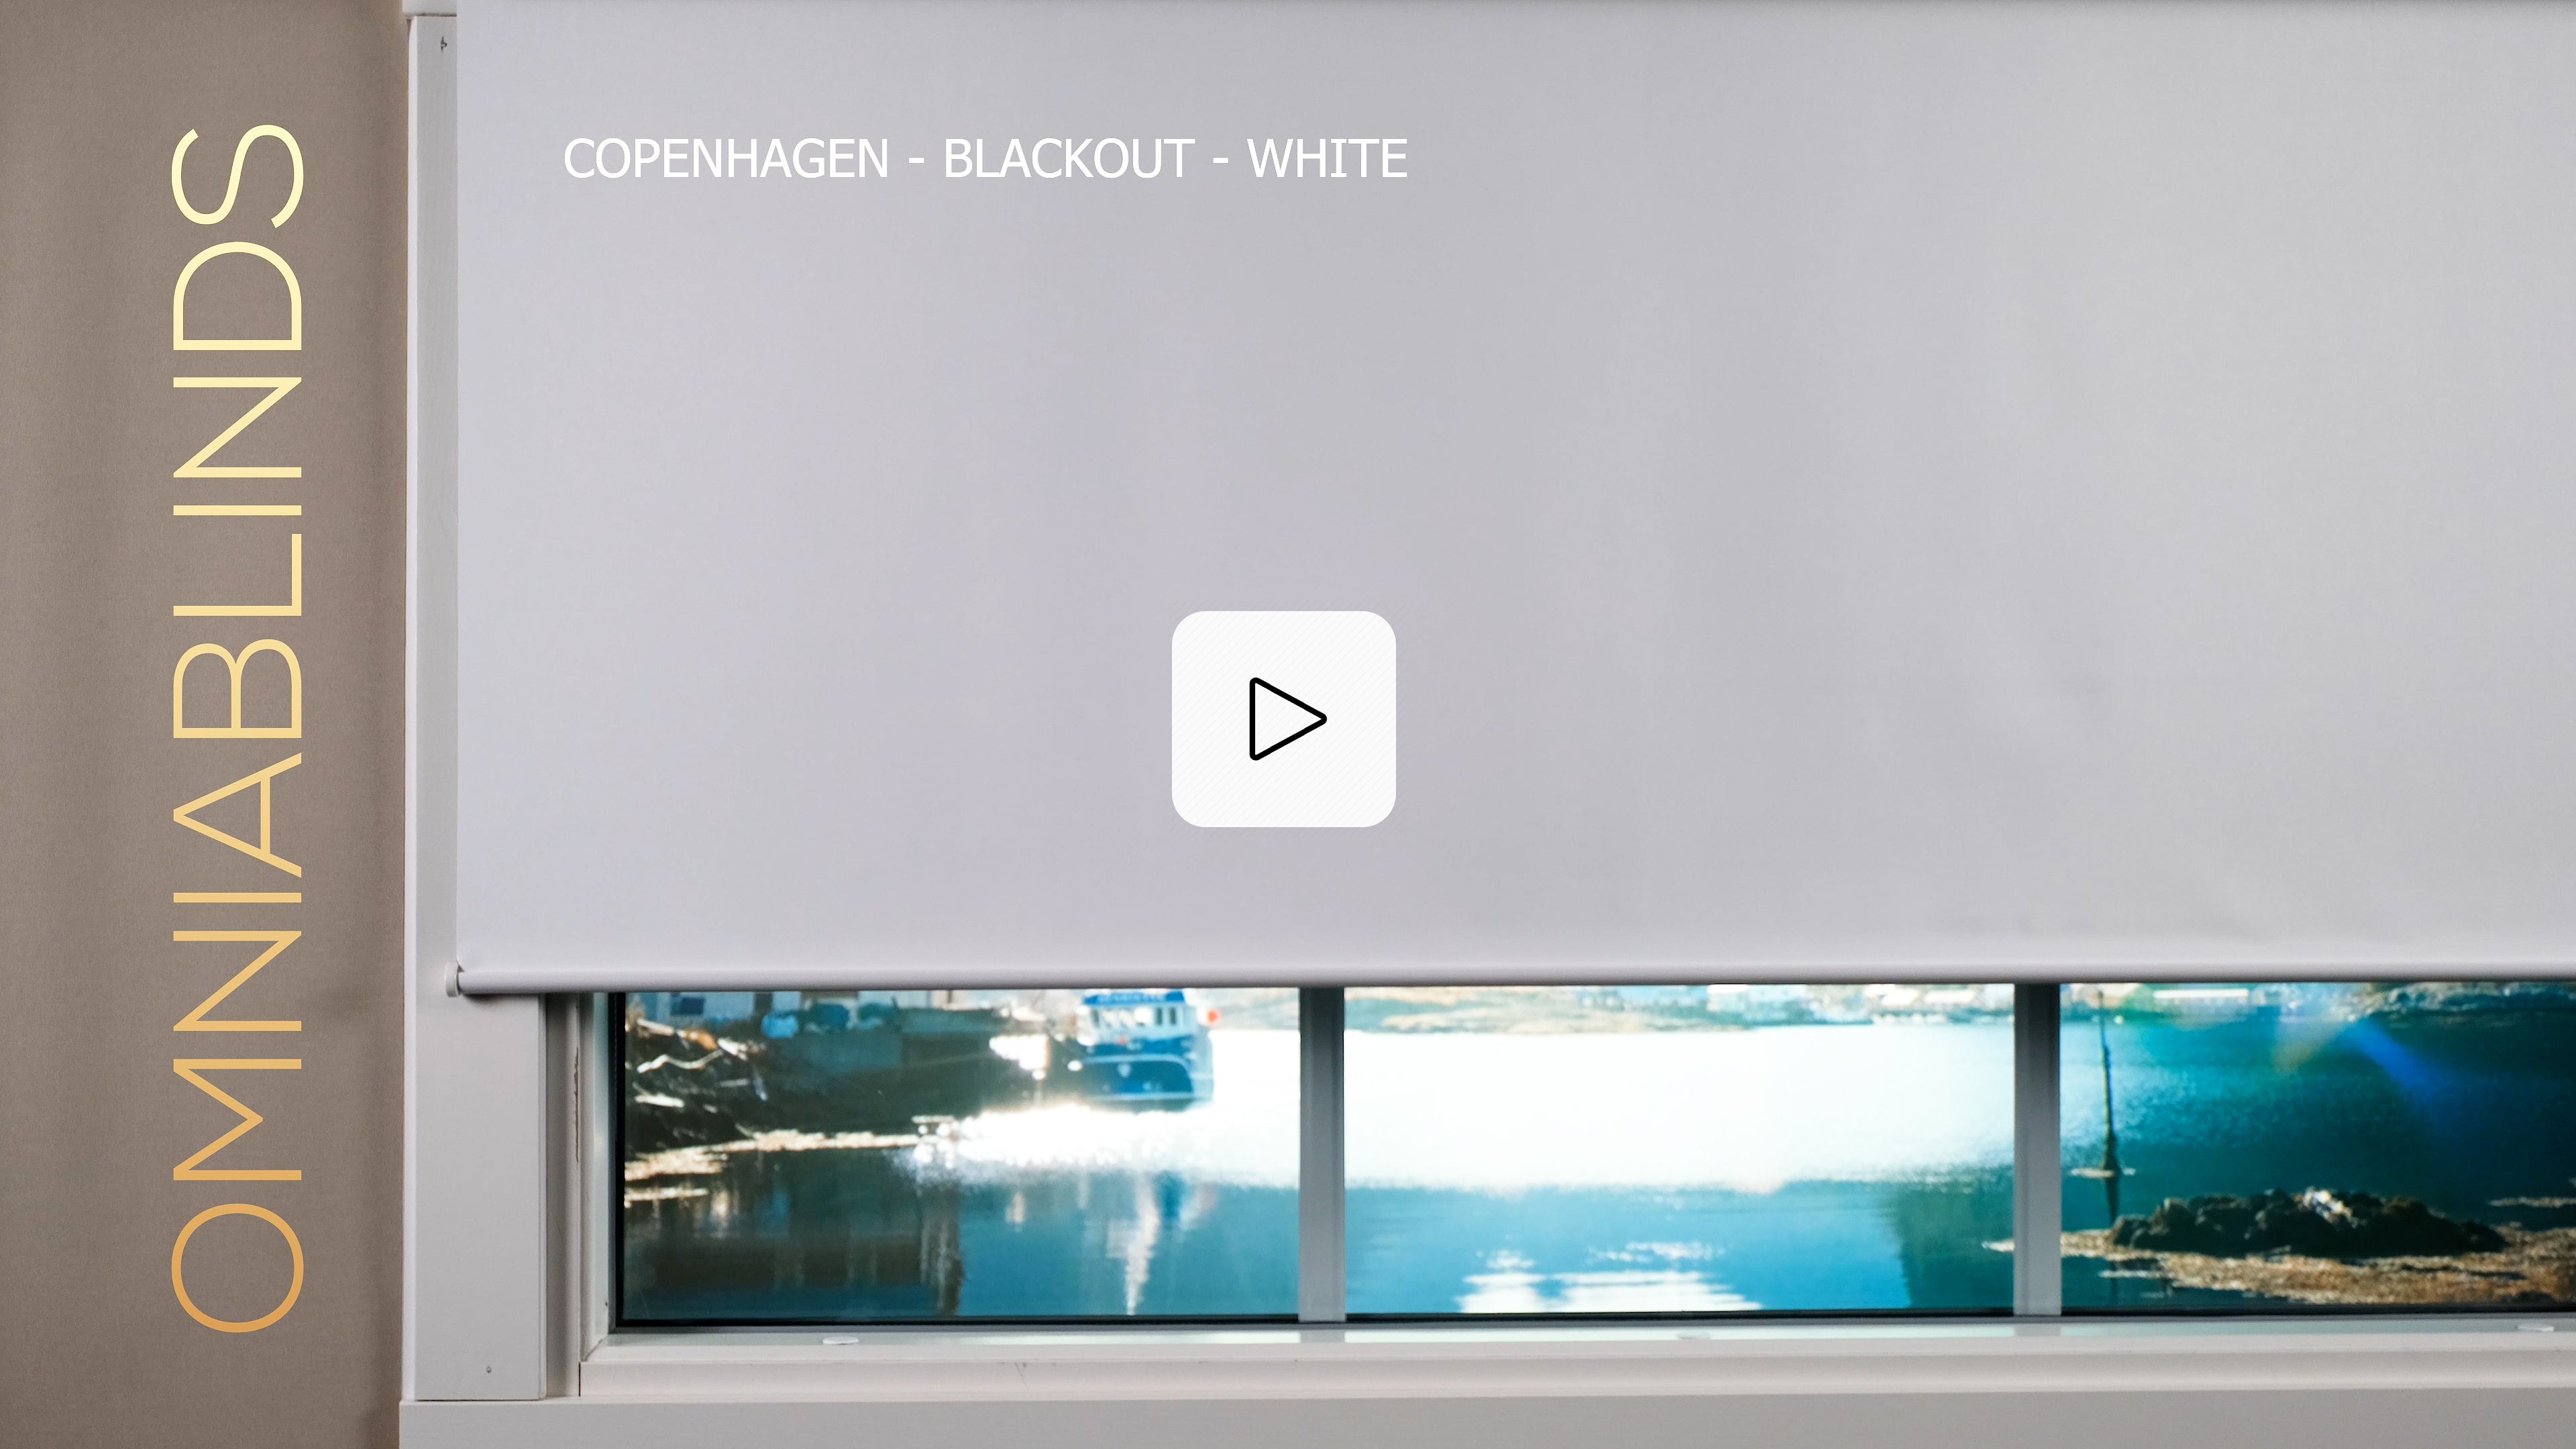 Copenhagen - Blackout - White